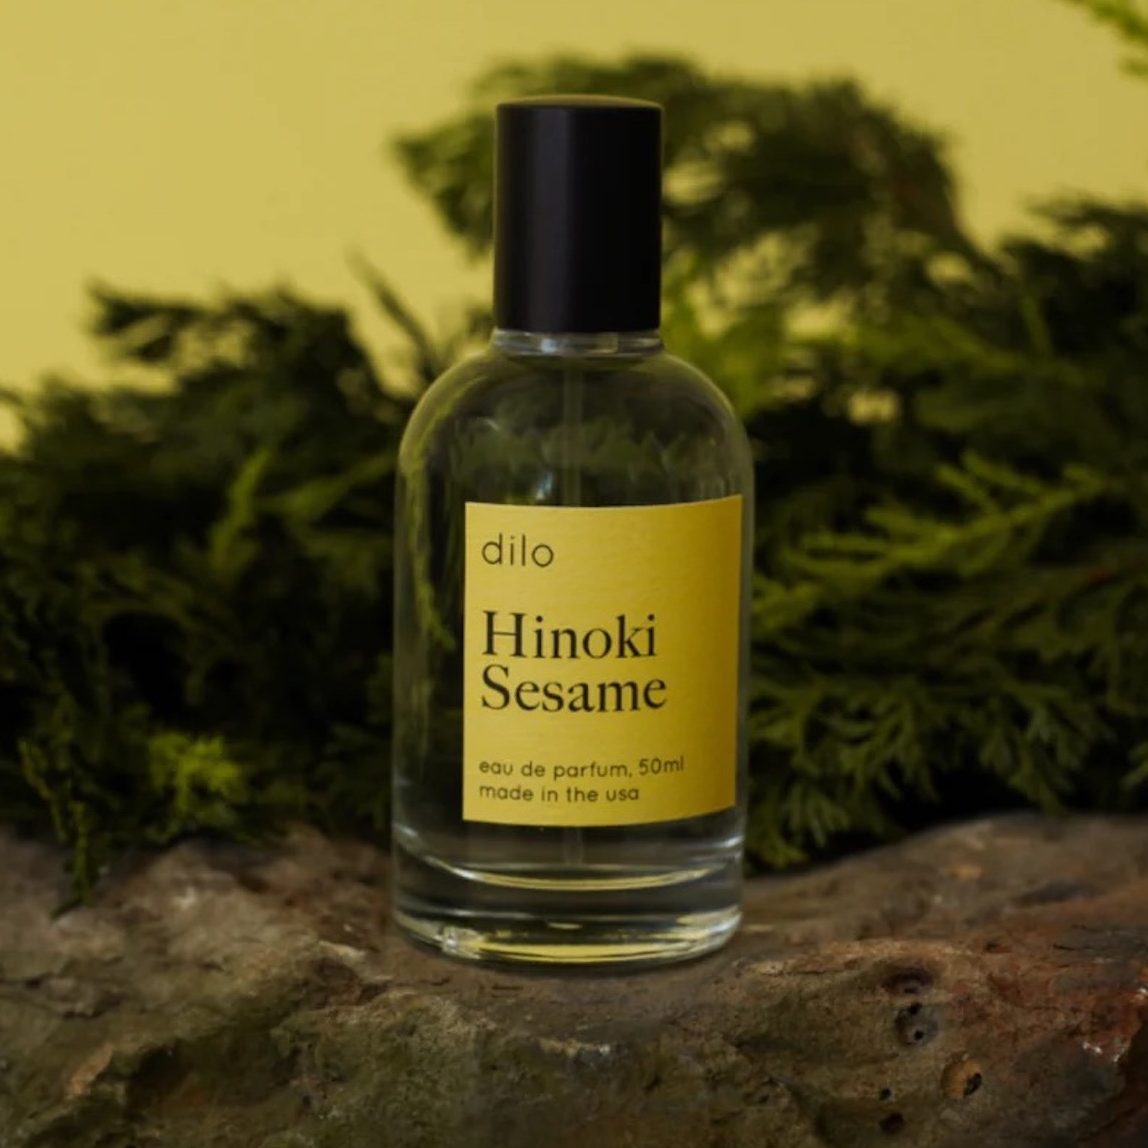 San Diego magazine holiday gift guide item Dilo Hinoki Sesame perfume from Adobe by Jess Vargas